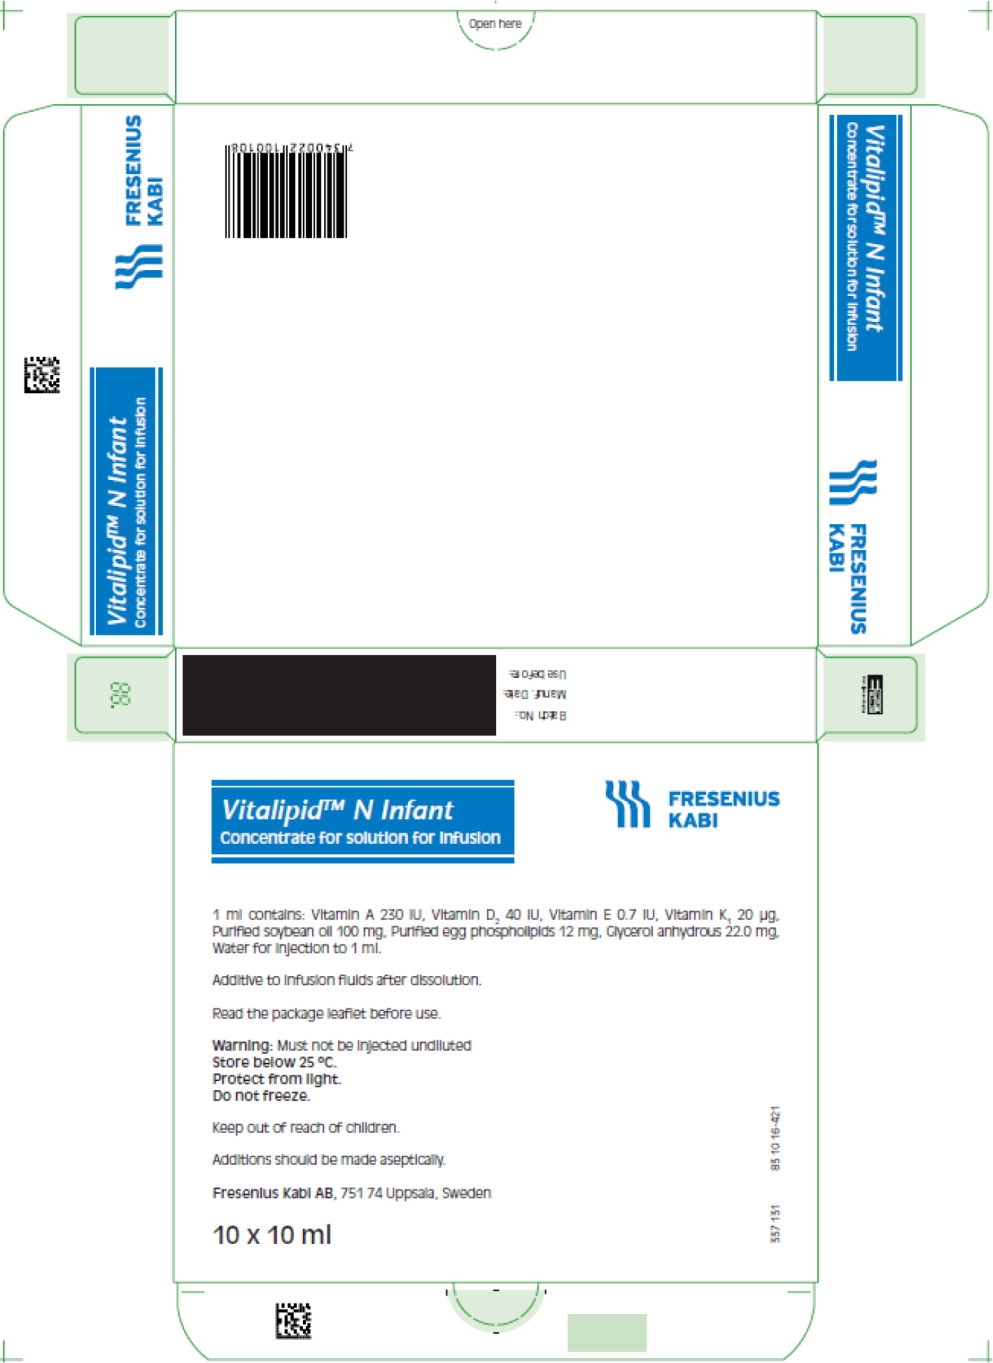 PACKAGE LABEL – PRINCIPAL DISPLAY PANEL – VITALIPID™ N Infant 10 mL Ampule Carton Panel
